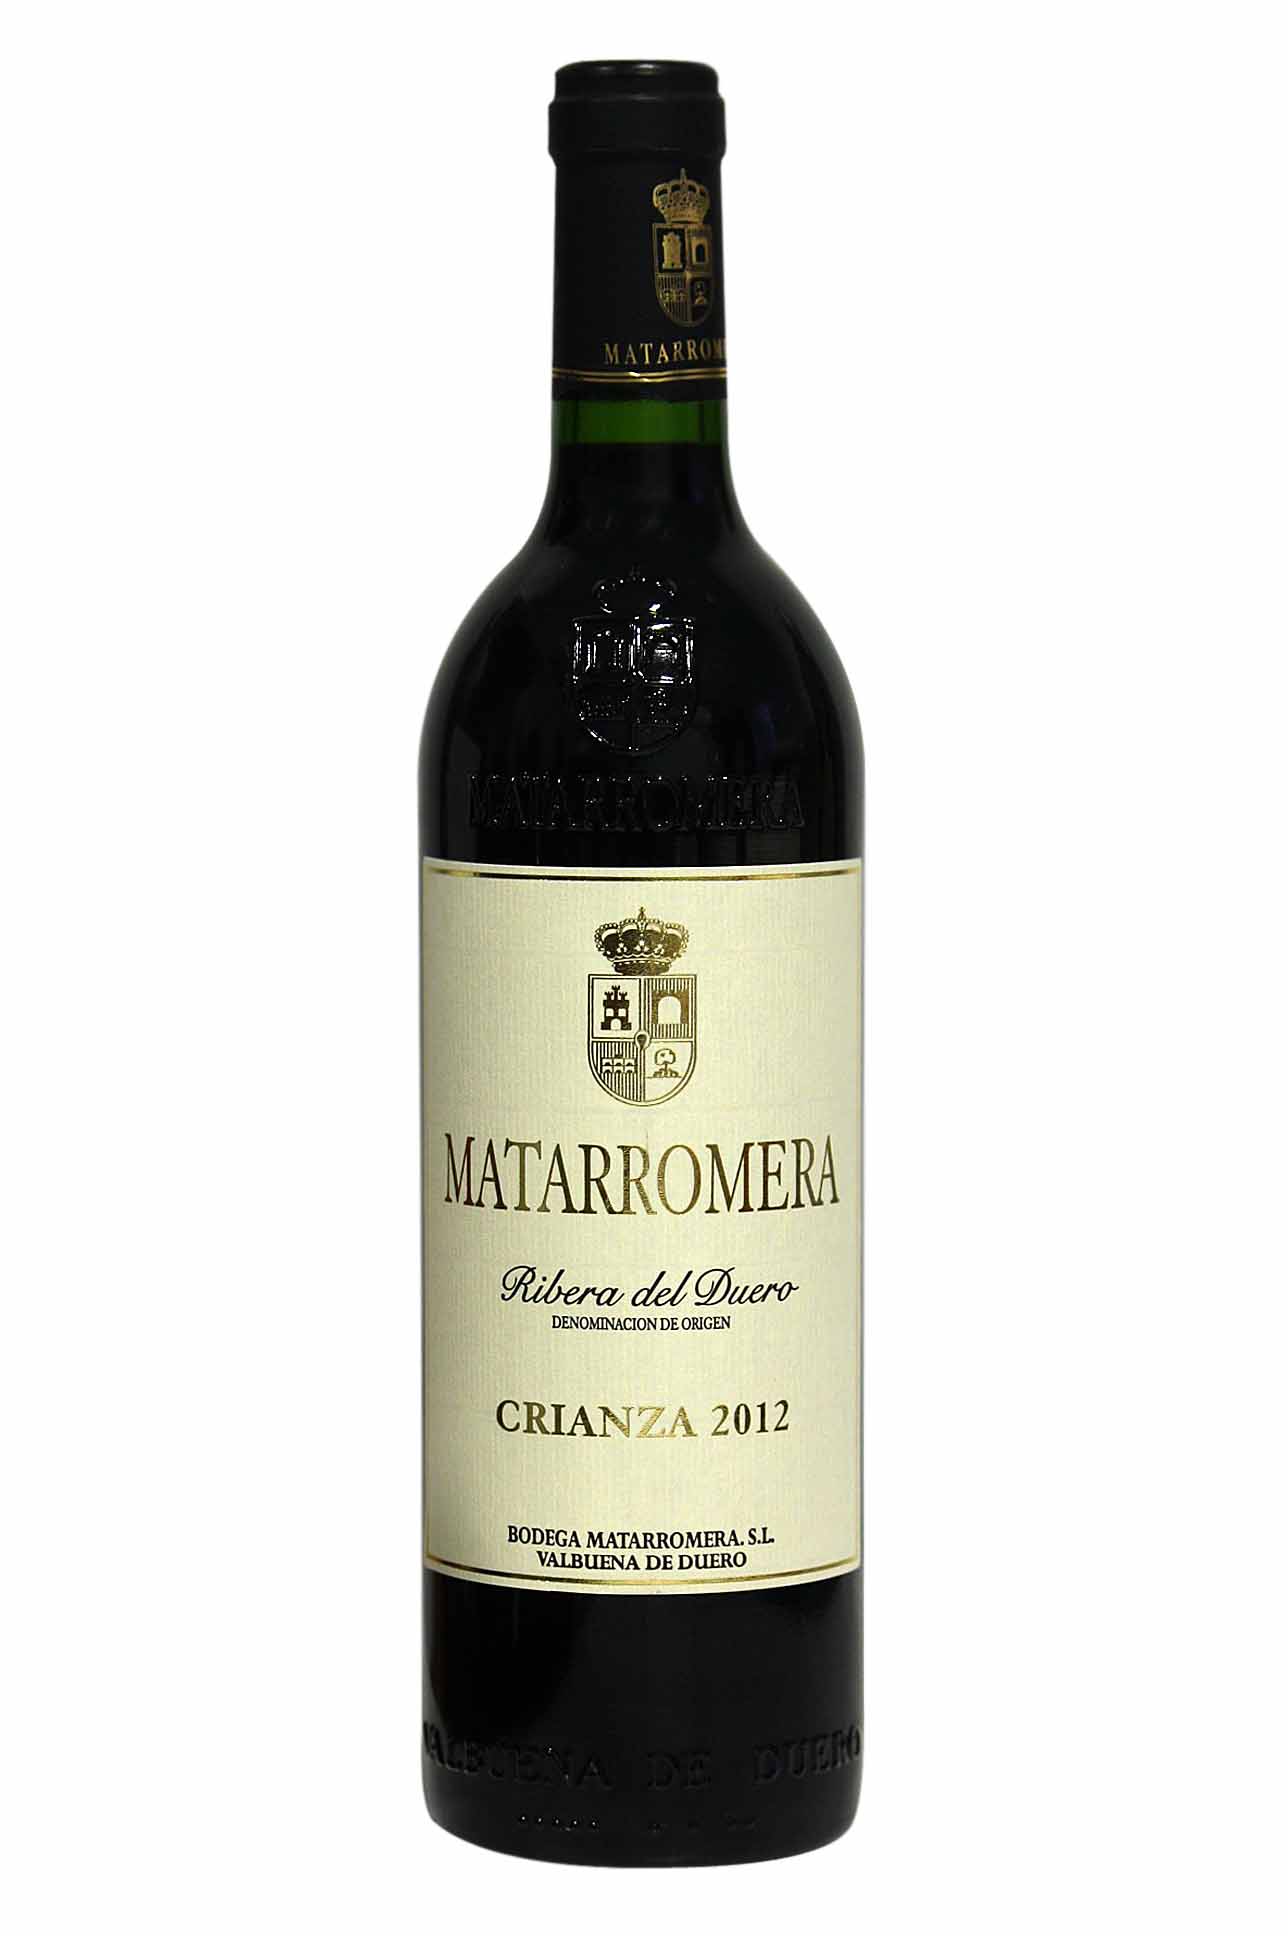 Matarrromera aged red wine